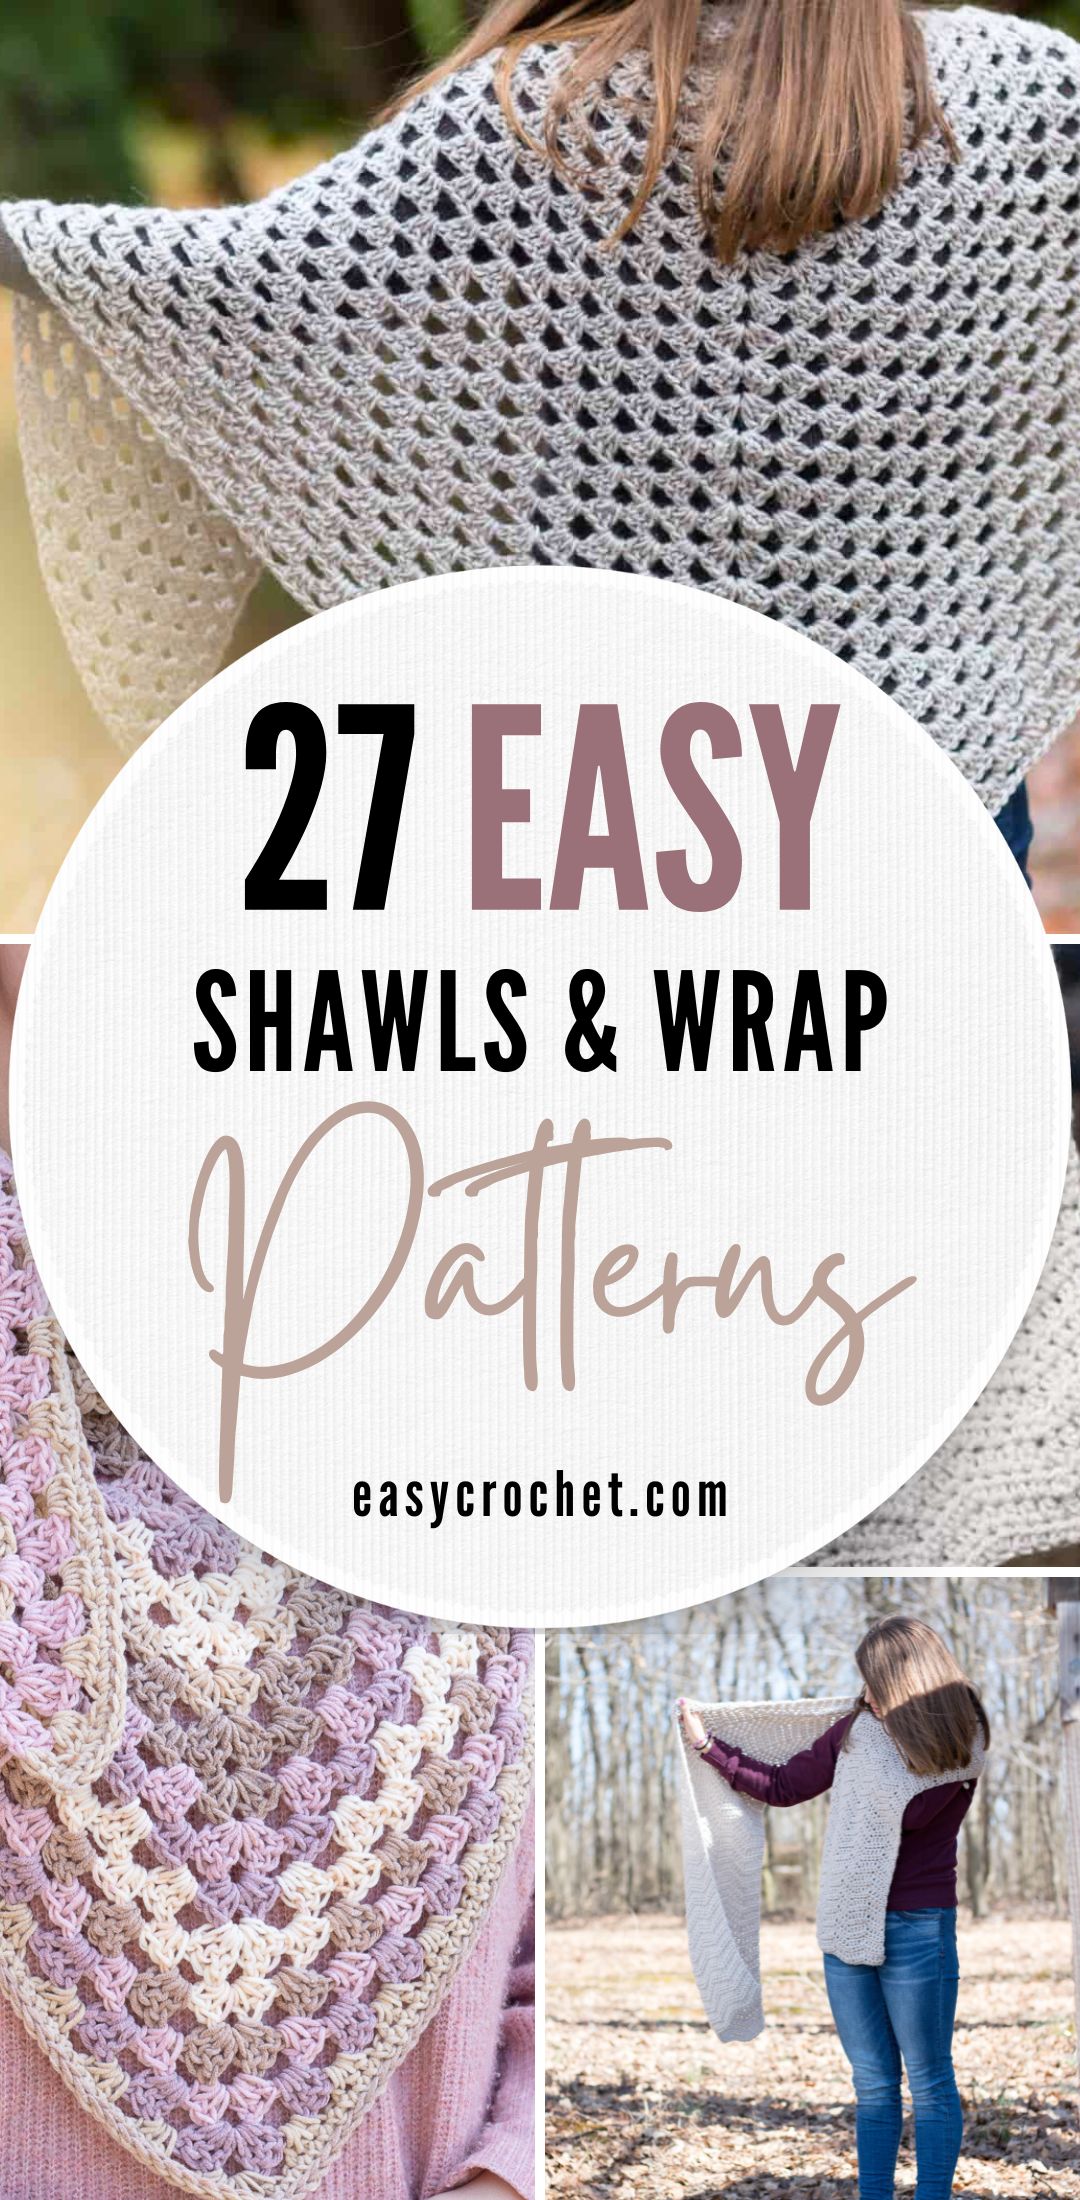 20 Free Crochet Shawl Patterns - Cream Of The Crop Crochet